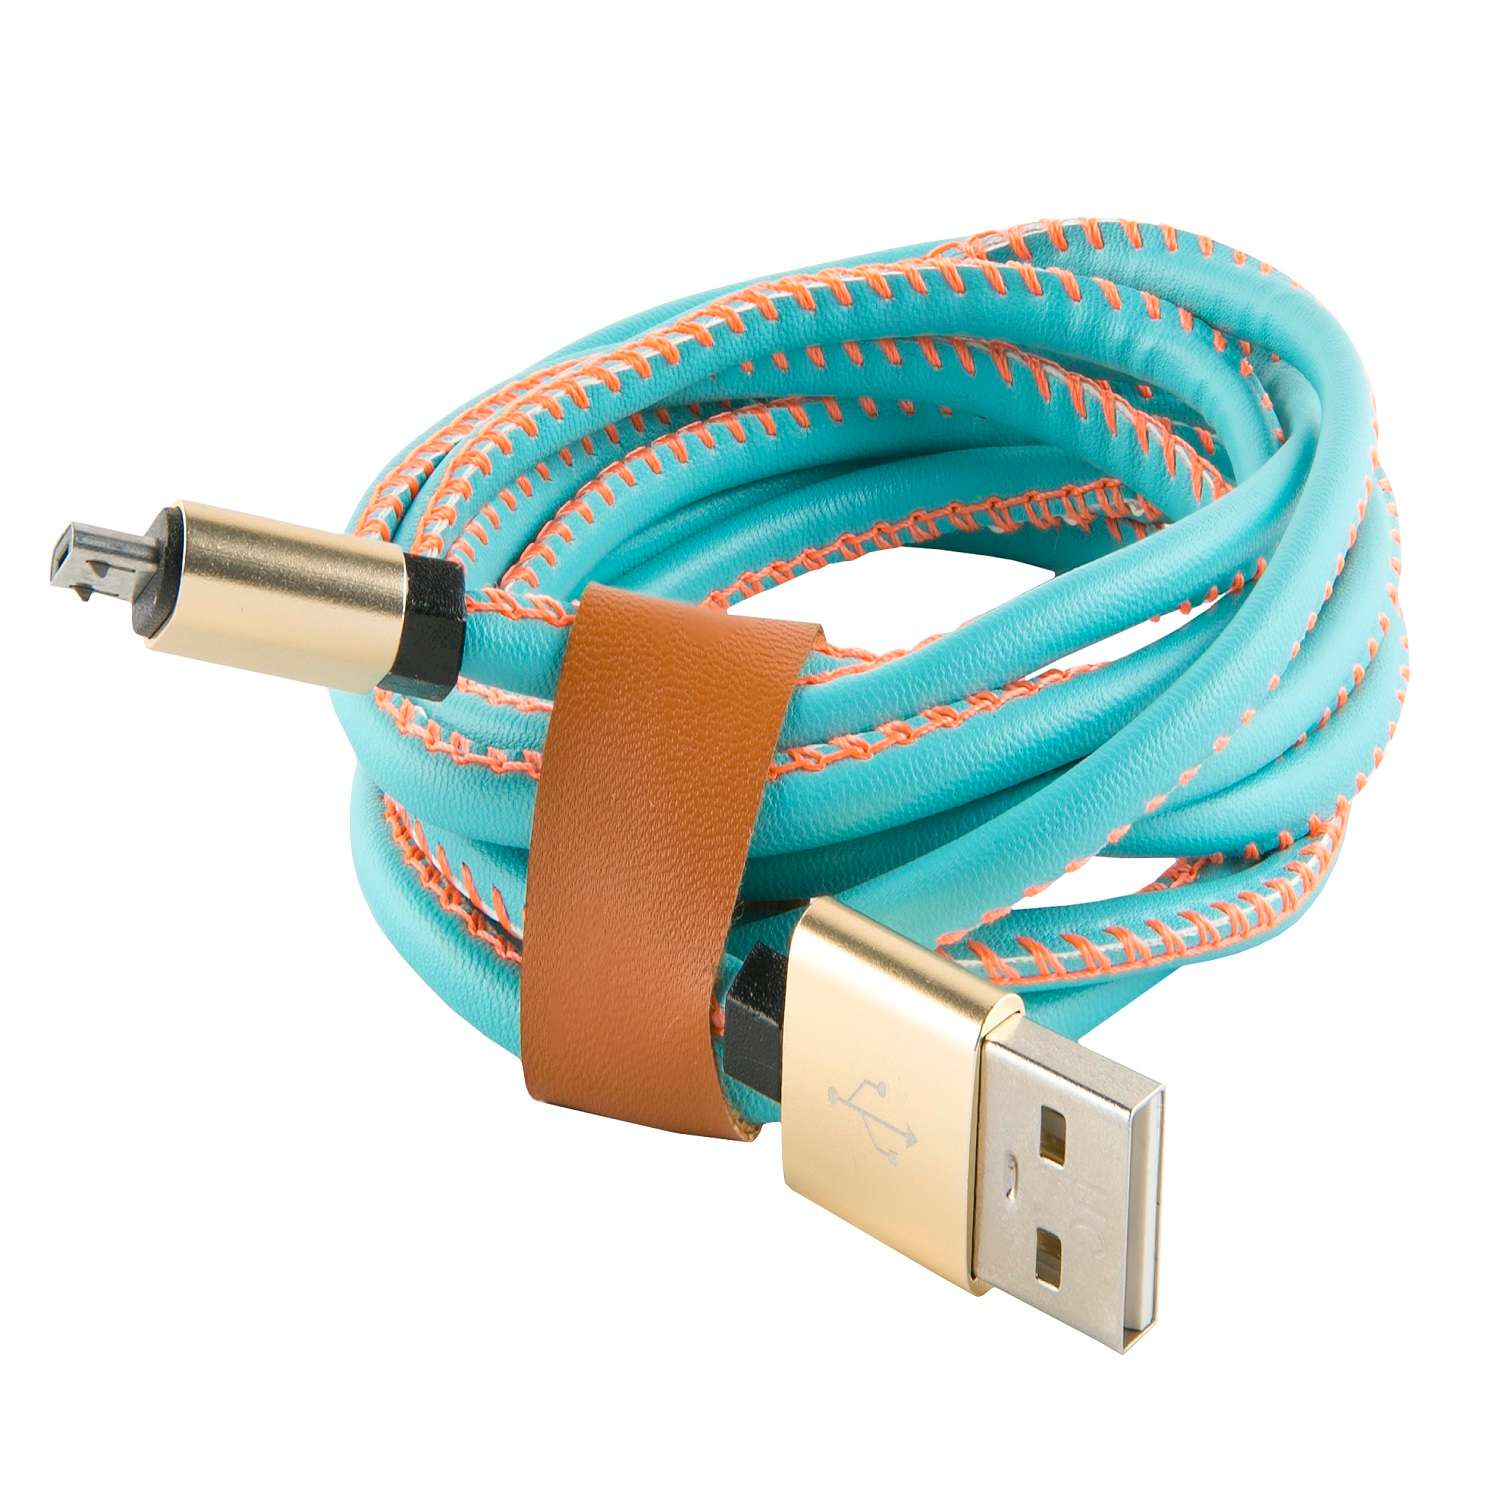 Redline провод. Red line кабель fishnet синий. Дата-кабель Red line USB - Type-c (2 метра) Оплетка "экокожа", коричневый. Кабель red line